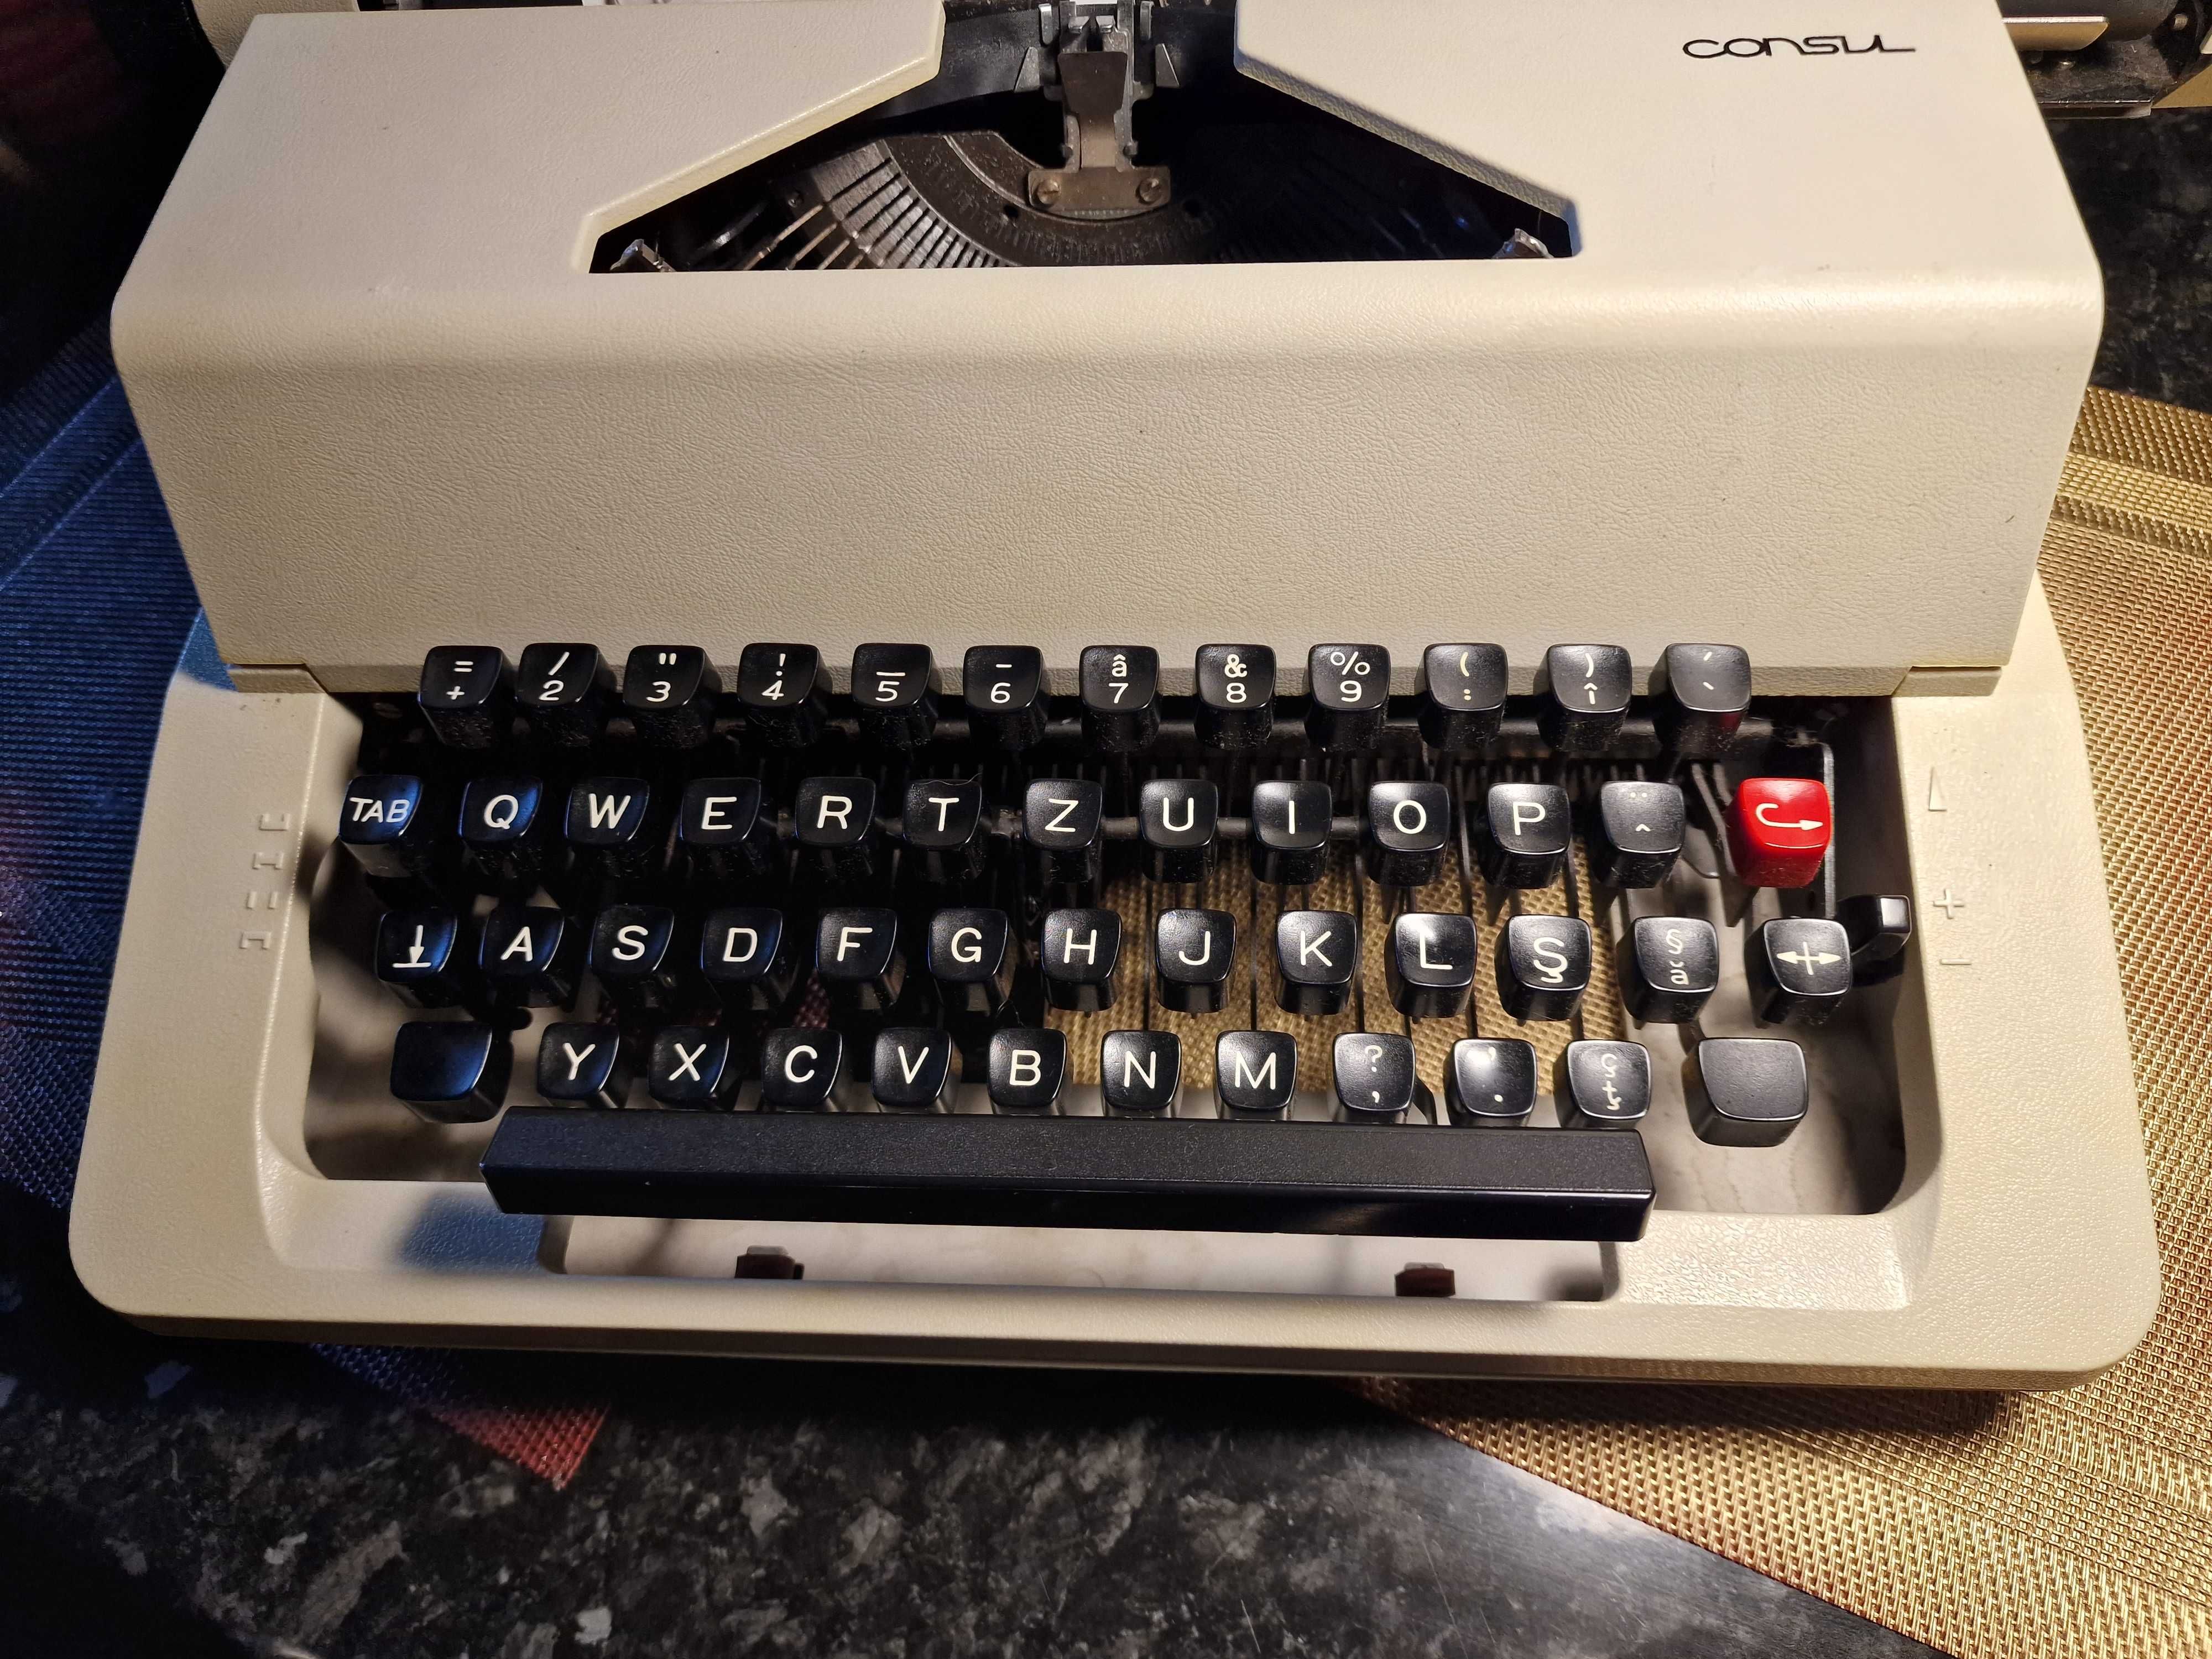 Masina de scris perfect functionala, cadoul potrivit